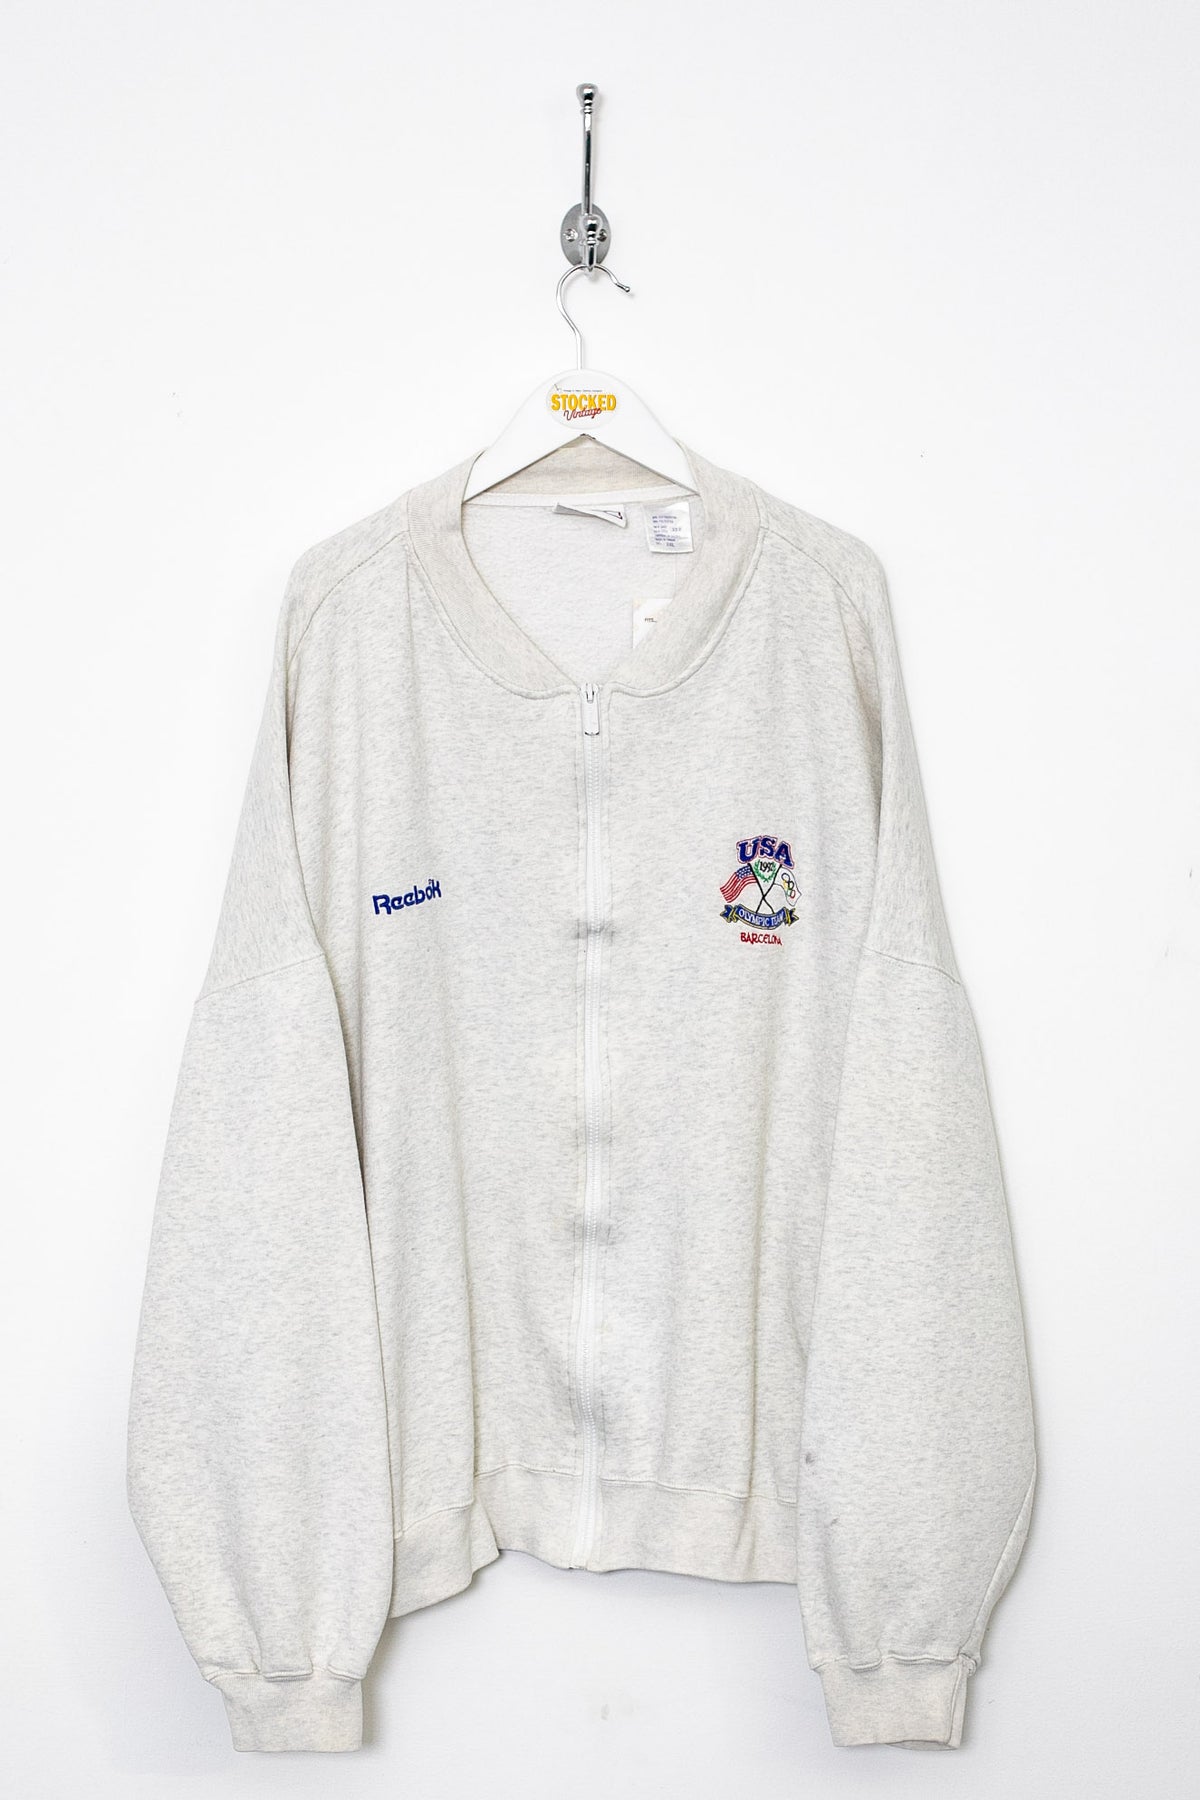 1992 Reebok USA Barcelona Olympics Zipped Sweatshirt (XXL)